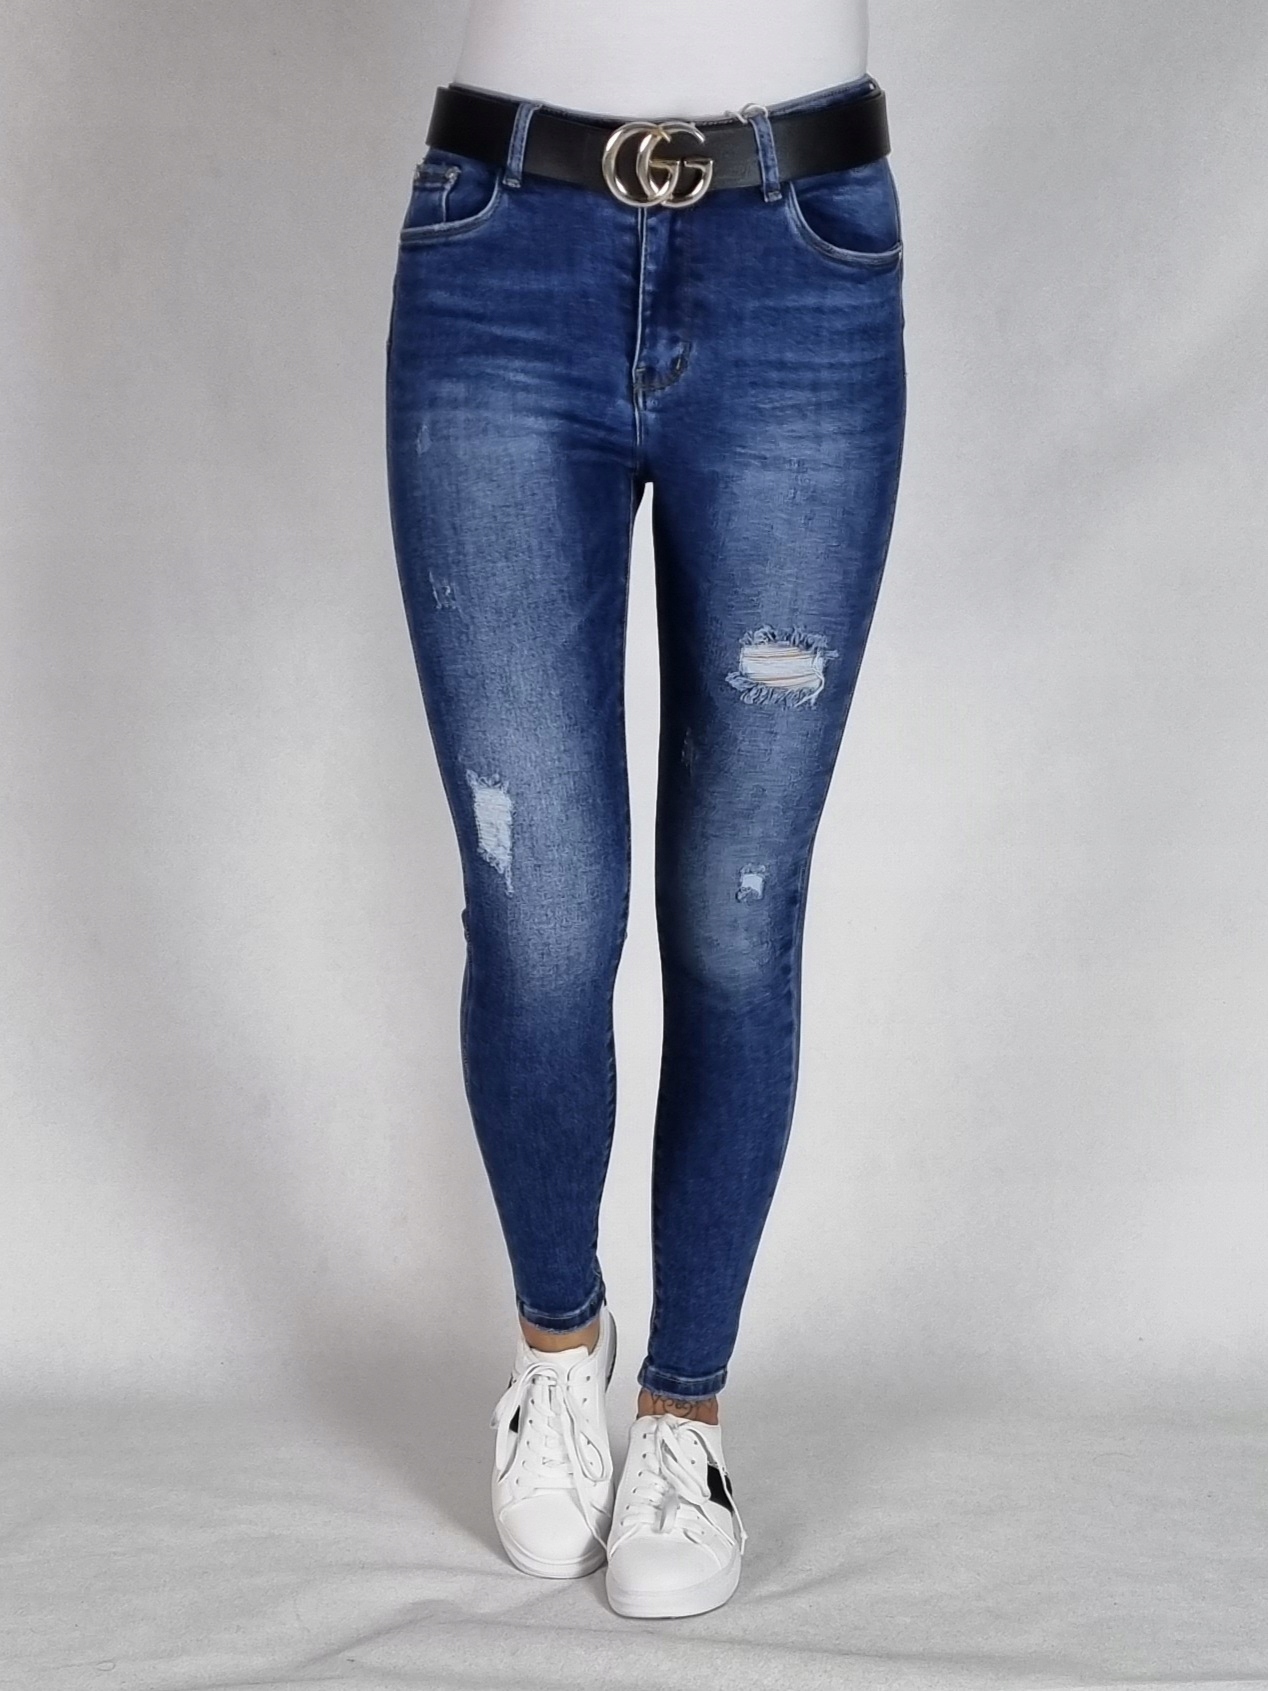 M. SARA джинсовые брюки с отверстиями размер 28 Midsection (Waist Height) high